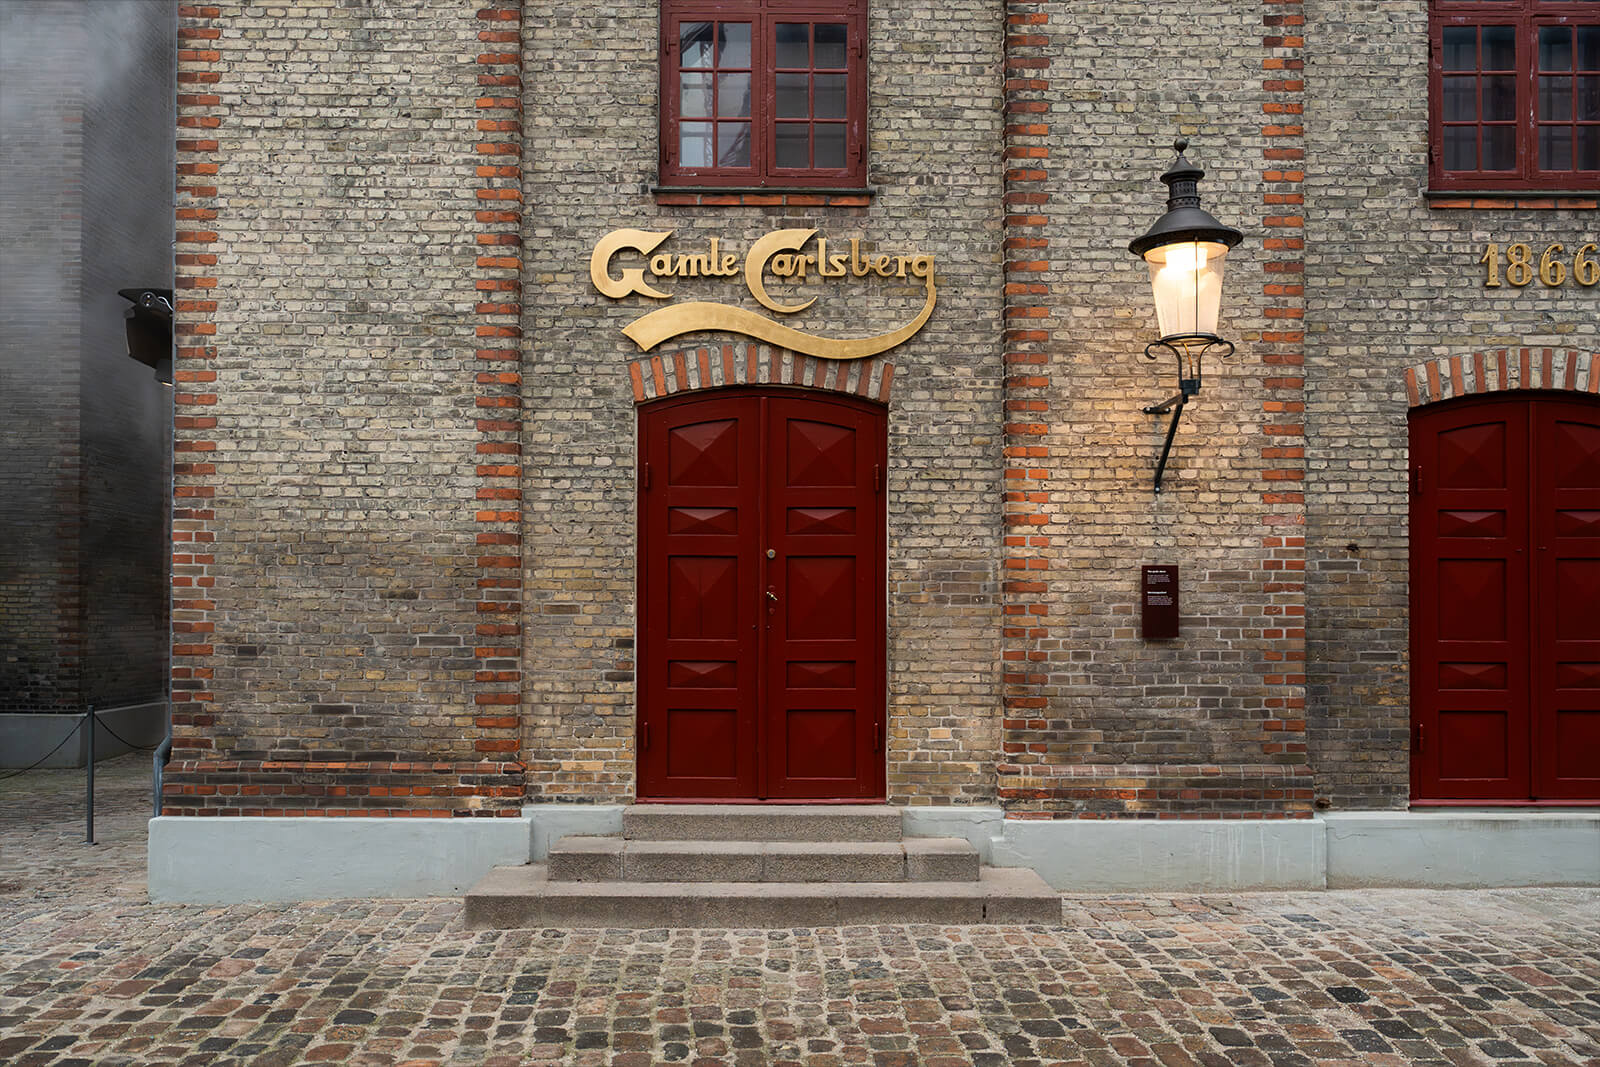 26 May: ‘Visit Carlsberg’ tour at Home of Carlsberg